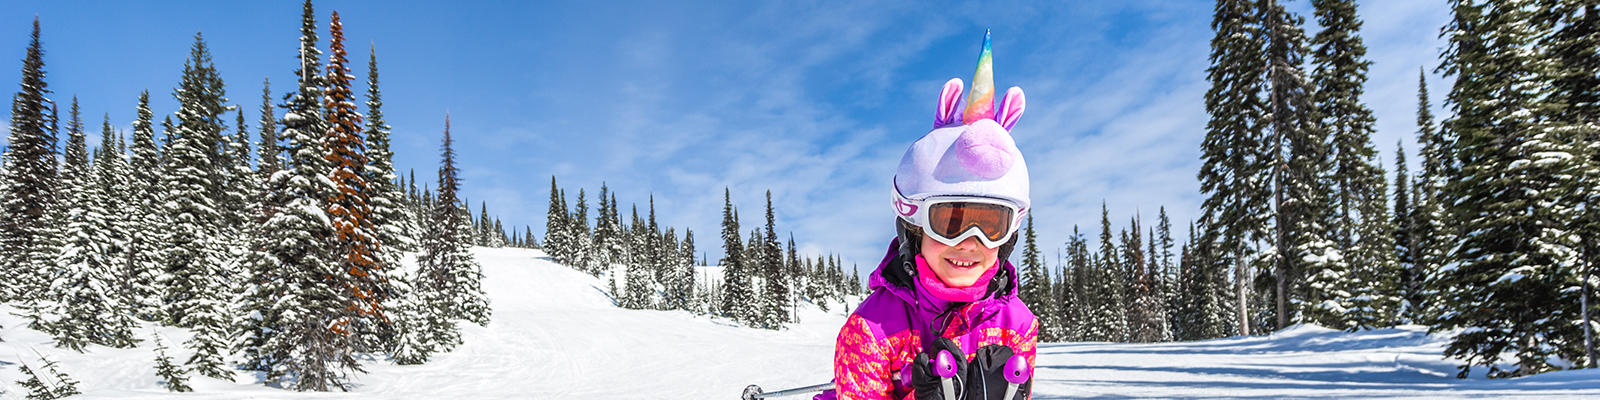 girl skiing on the slopes at Big White Cananda, dressed as a unicorn. Credit: Big White Ski Resort